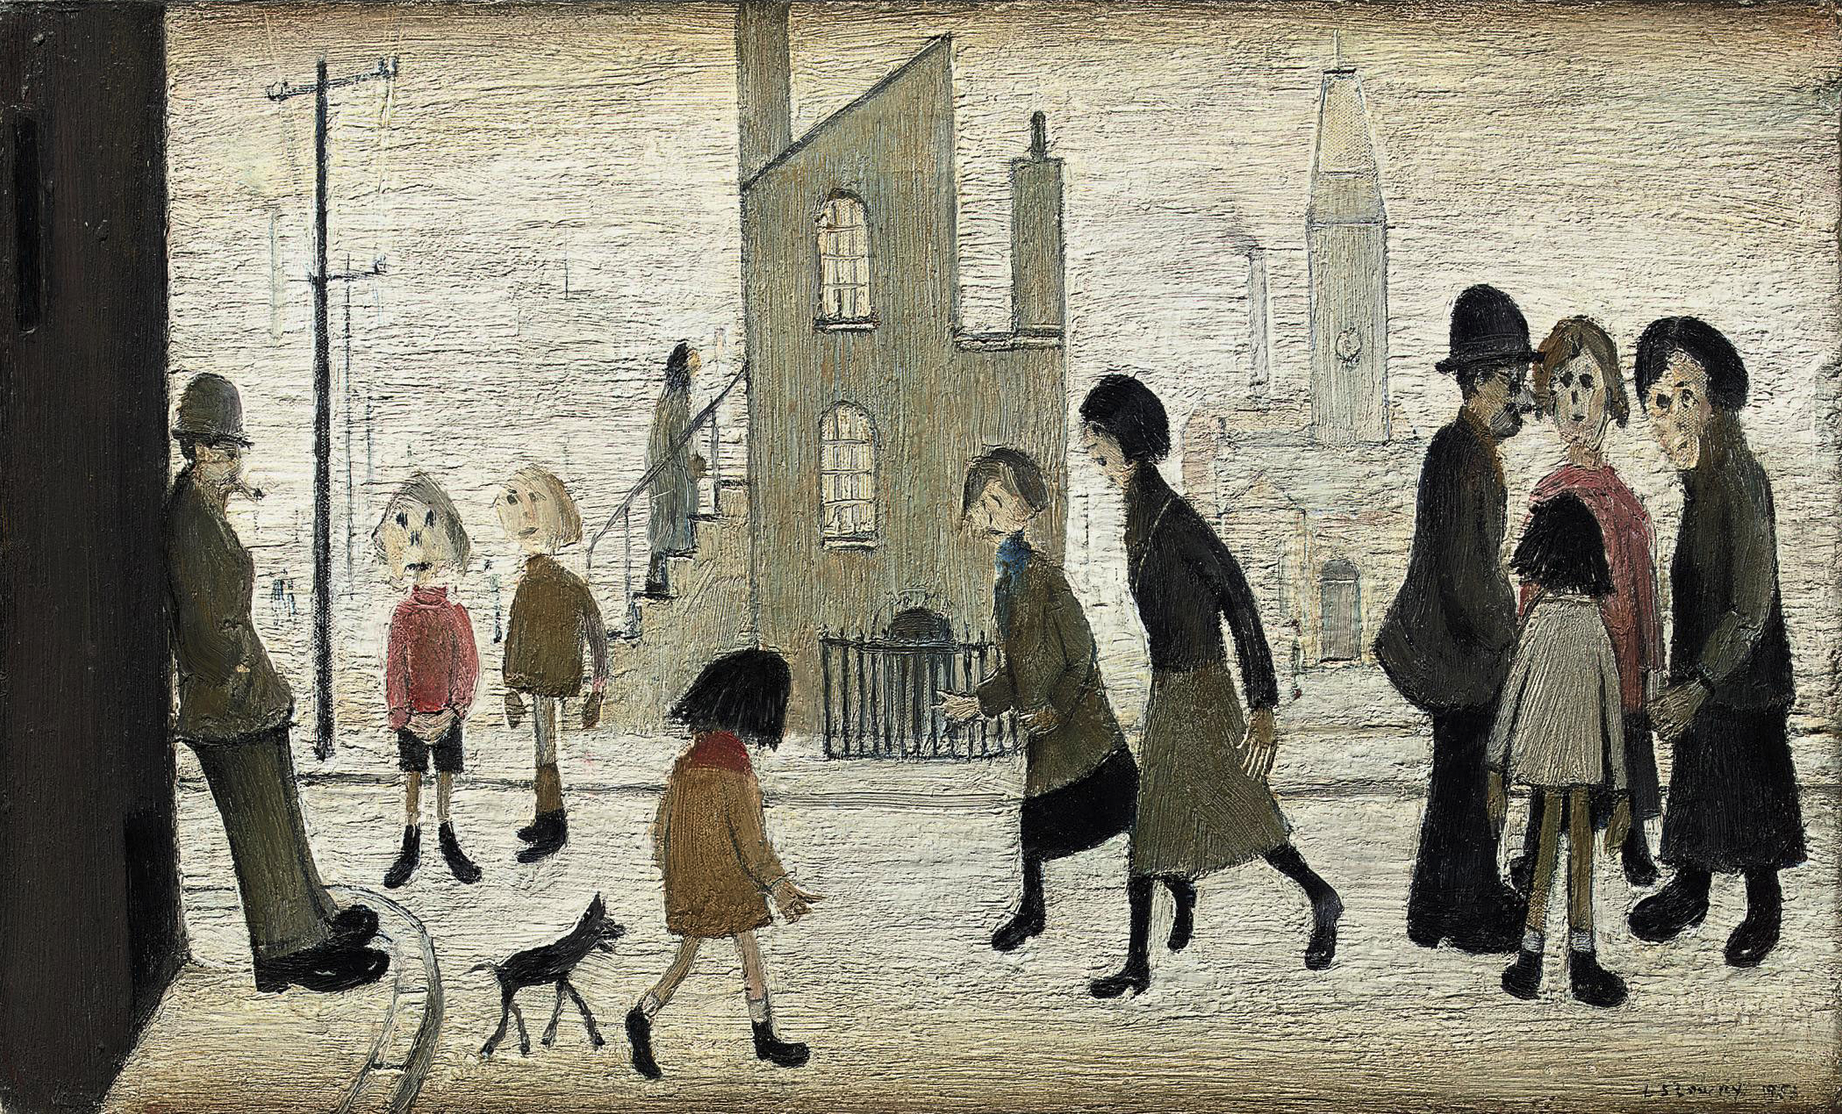 Street Scene (1953) by Laurence Stephen Lowry (1887 - 1976), English artist.